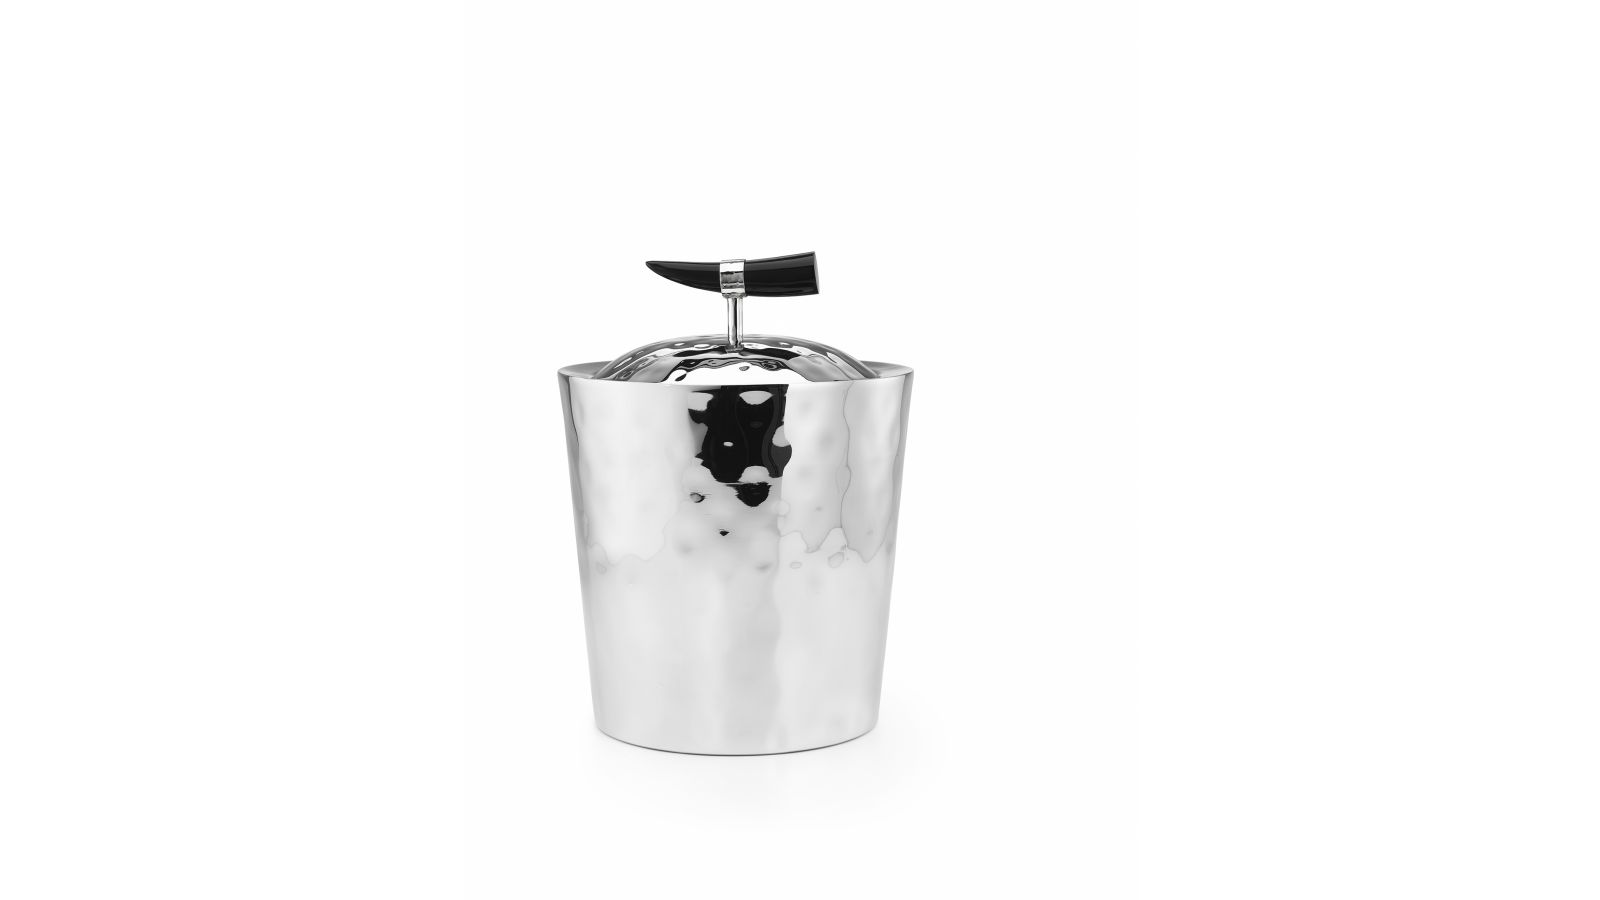 Orion Ice Bucket